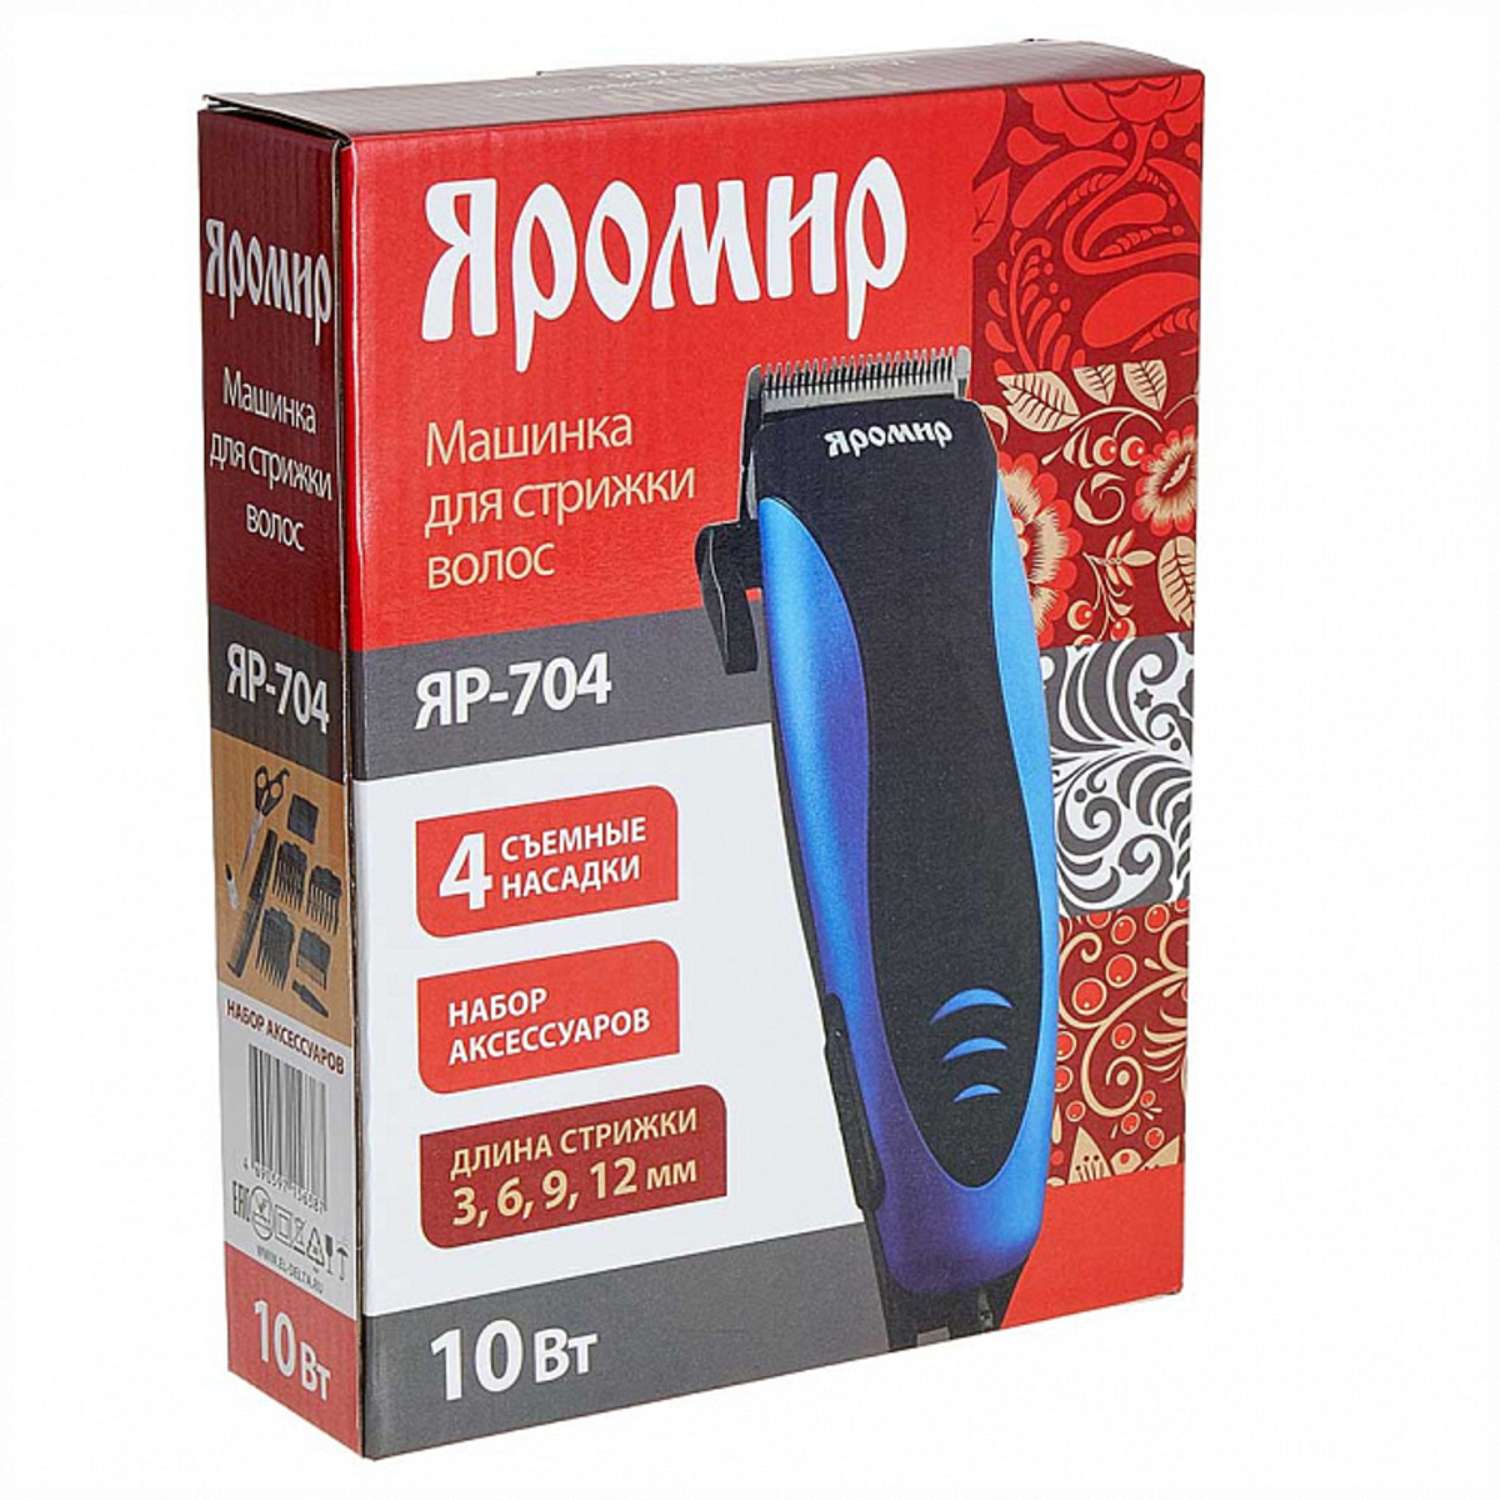 Машинка для стрижки волос Яромир ЯР-704 черный с синим 10Вт 4 съемных гребня - фото 3